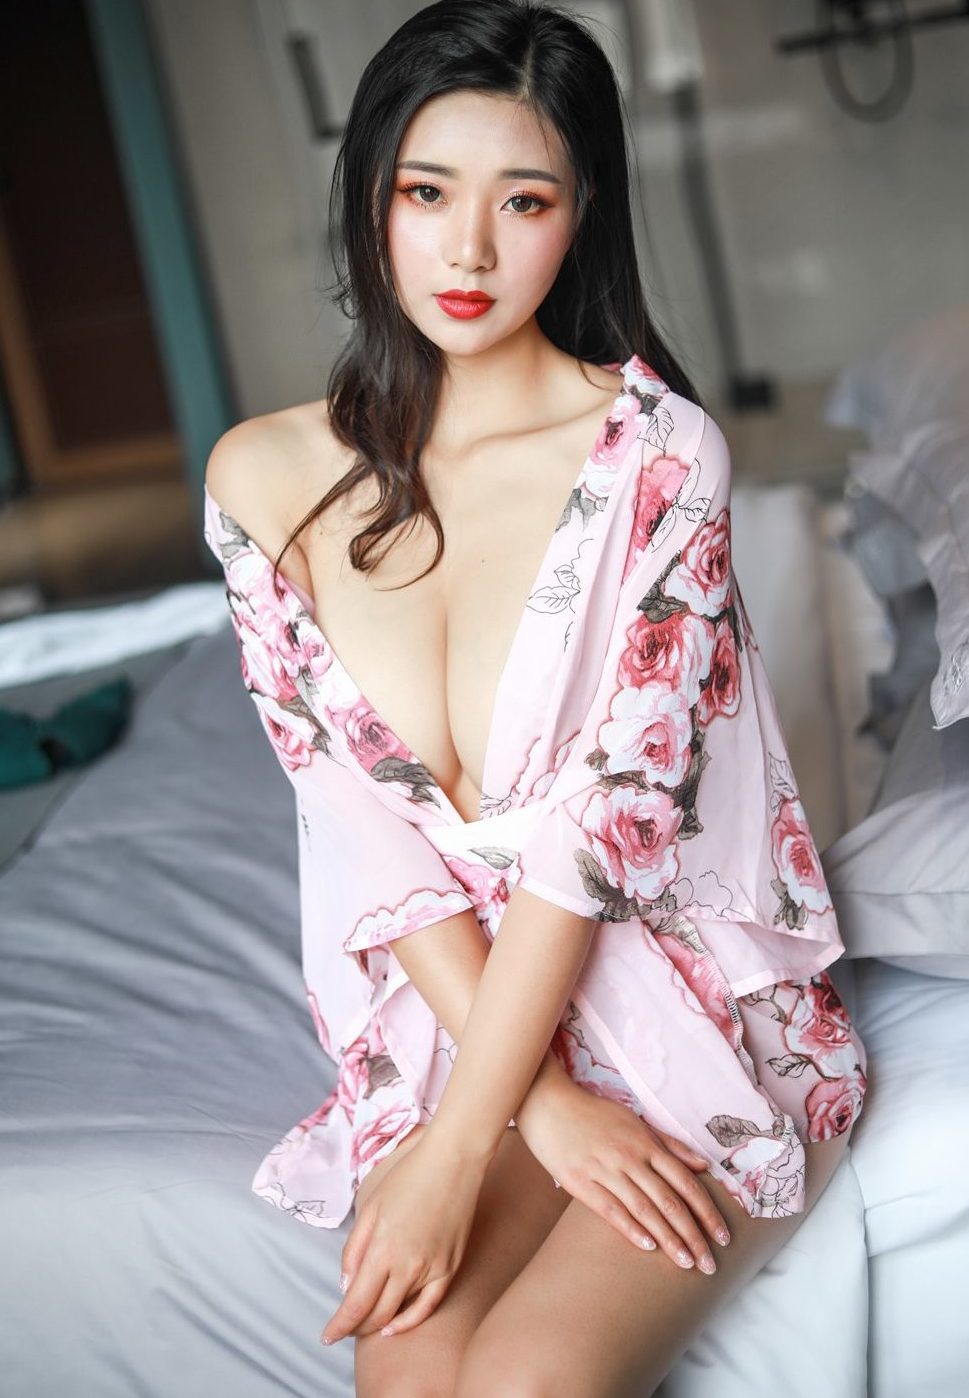 kiki - hot asian girl with big bust 